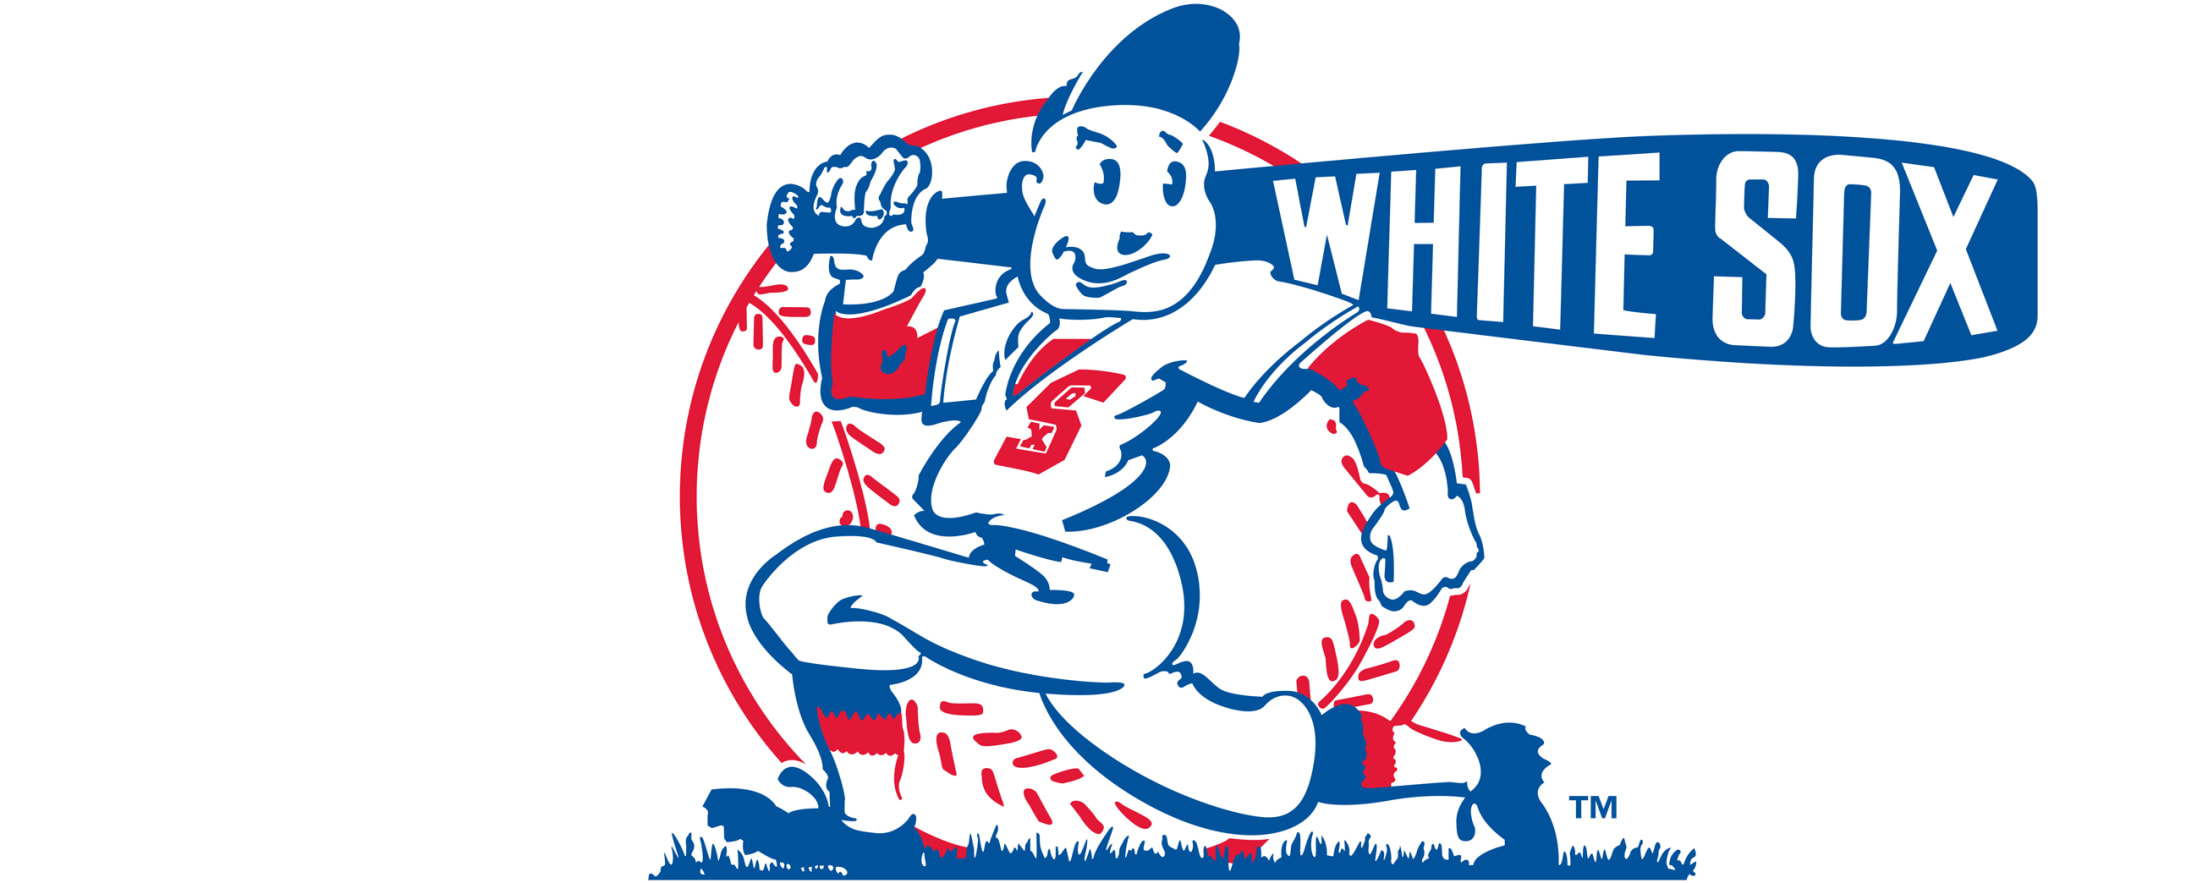 1969 white sox jersey